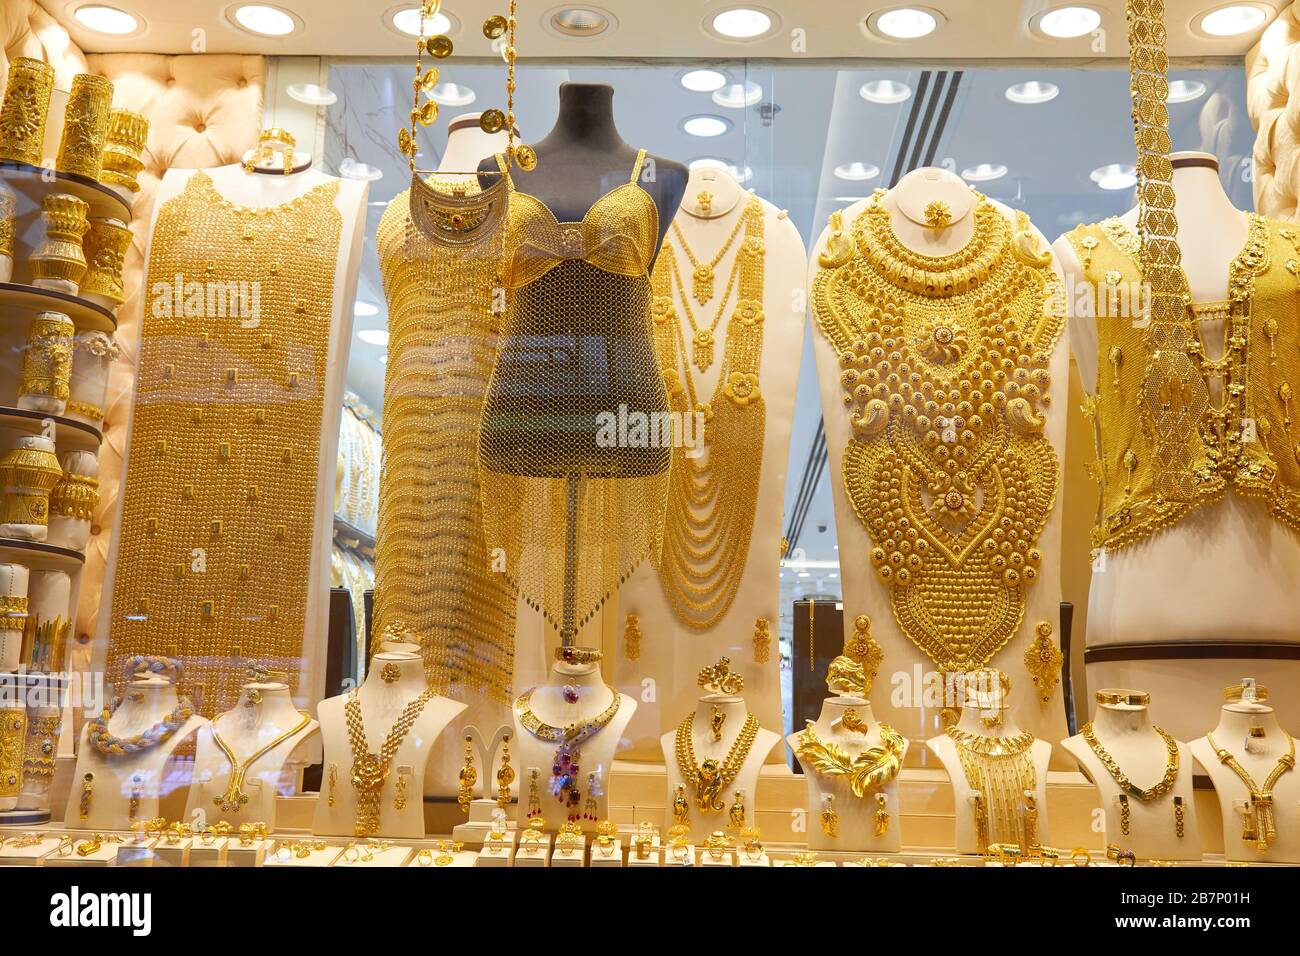 DUBAI, UNITED ARAB EMIRATES - NOVEMBER 21, 2019: Dubai gold souk market window with jewellery, necklaces, dress and luxury accessories Stock Photo